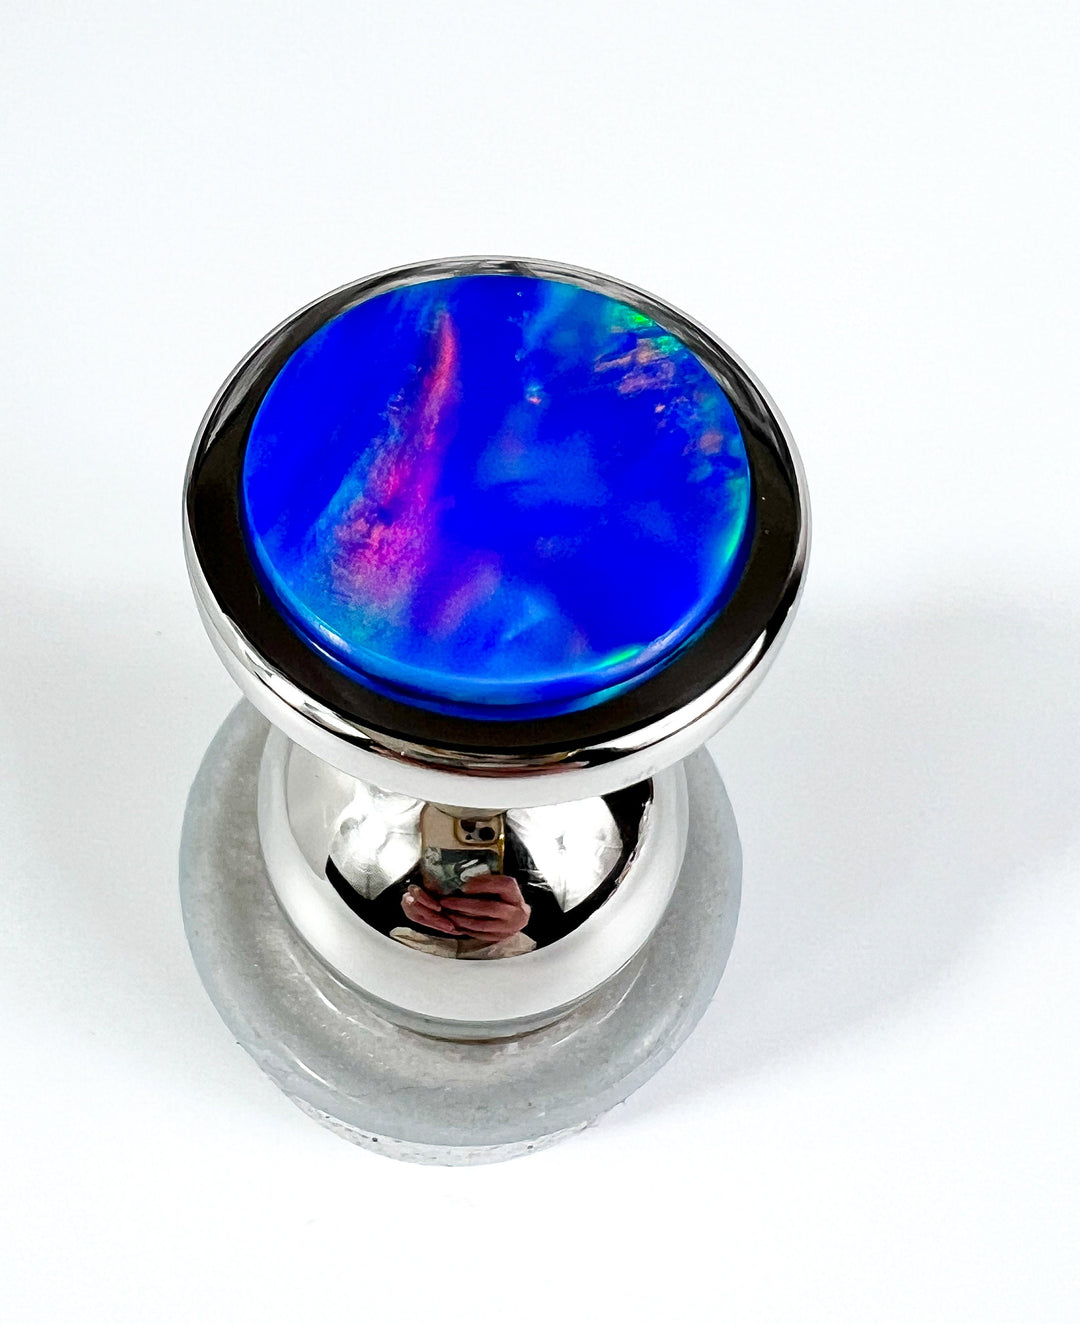 Opal Butt Plugs stainless steel